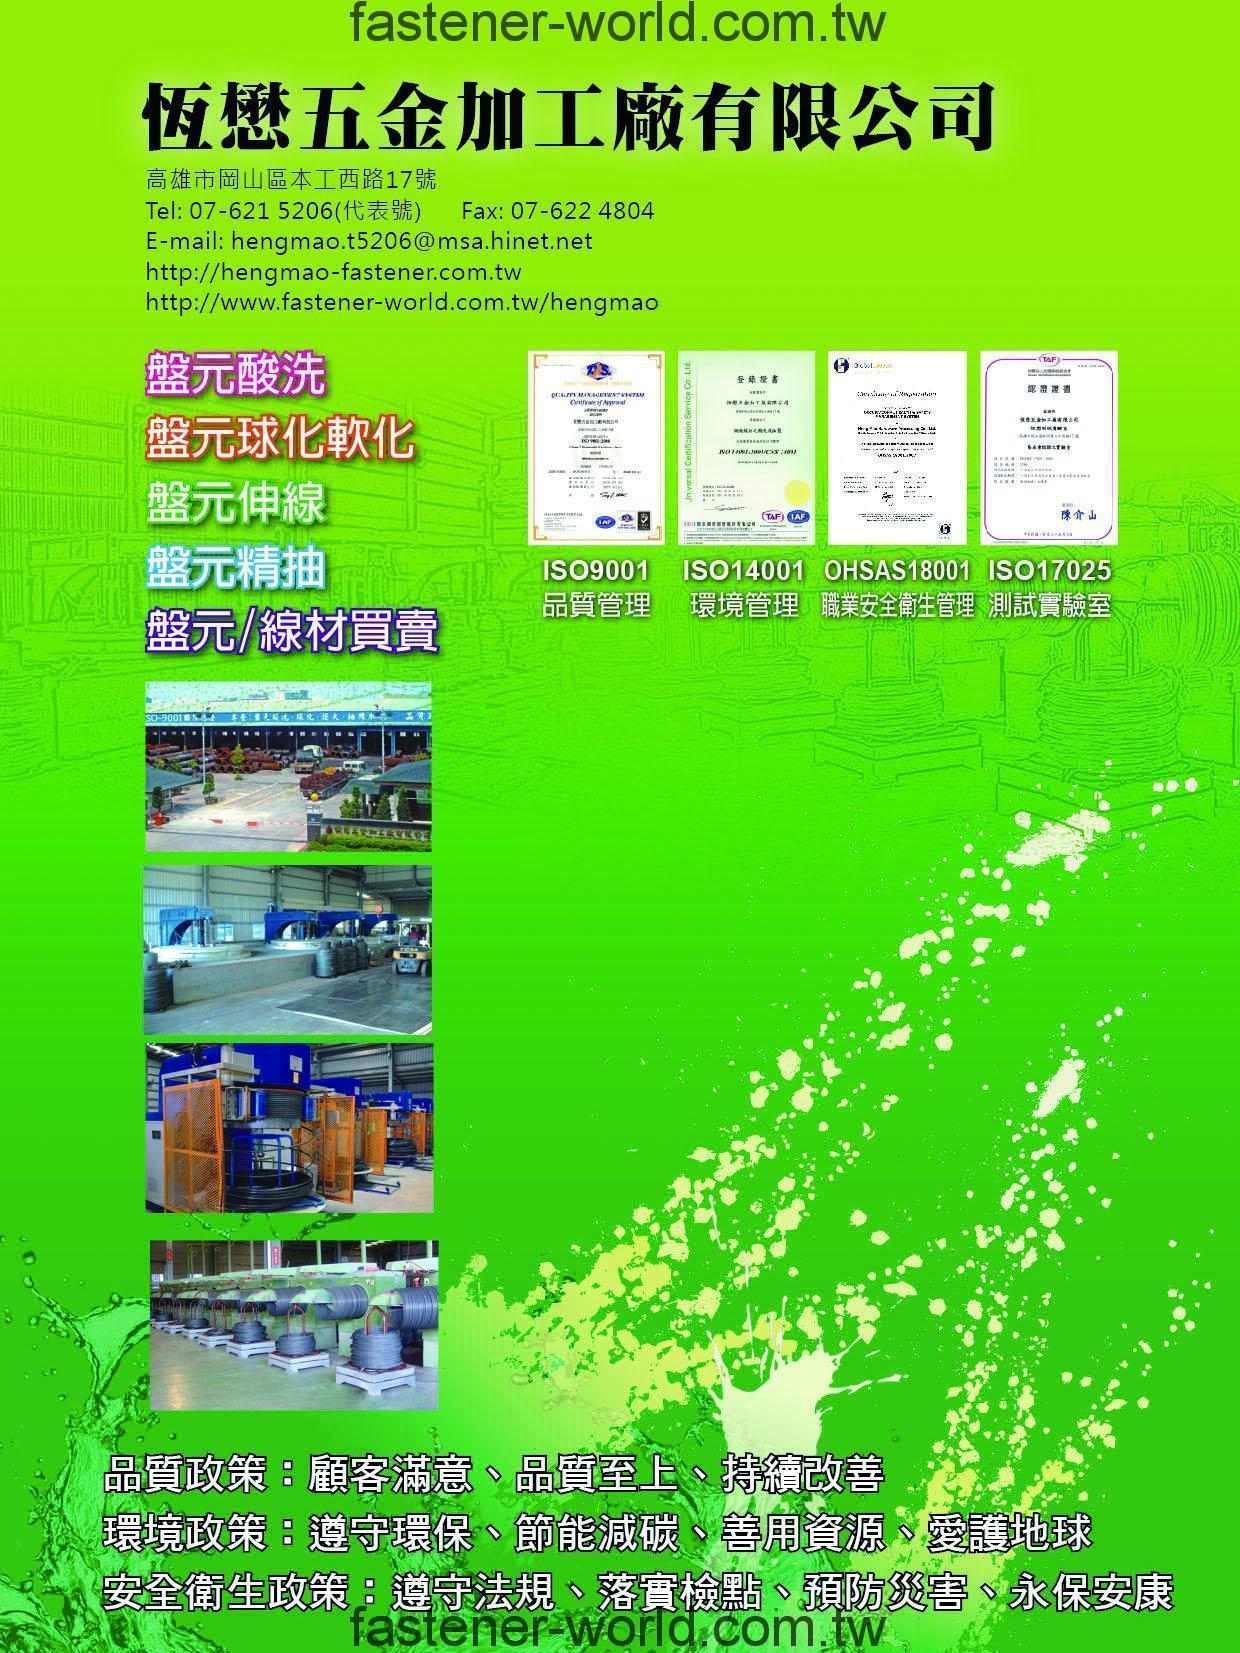 HENG MAO HARDWARE PROCESSING CO., LTD. Online Catalogues